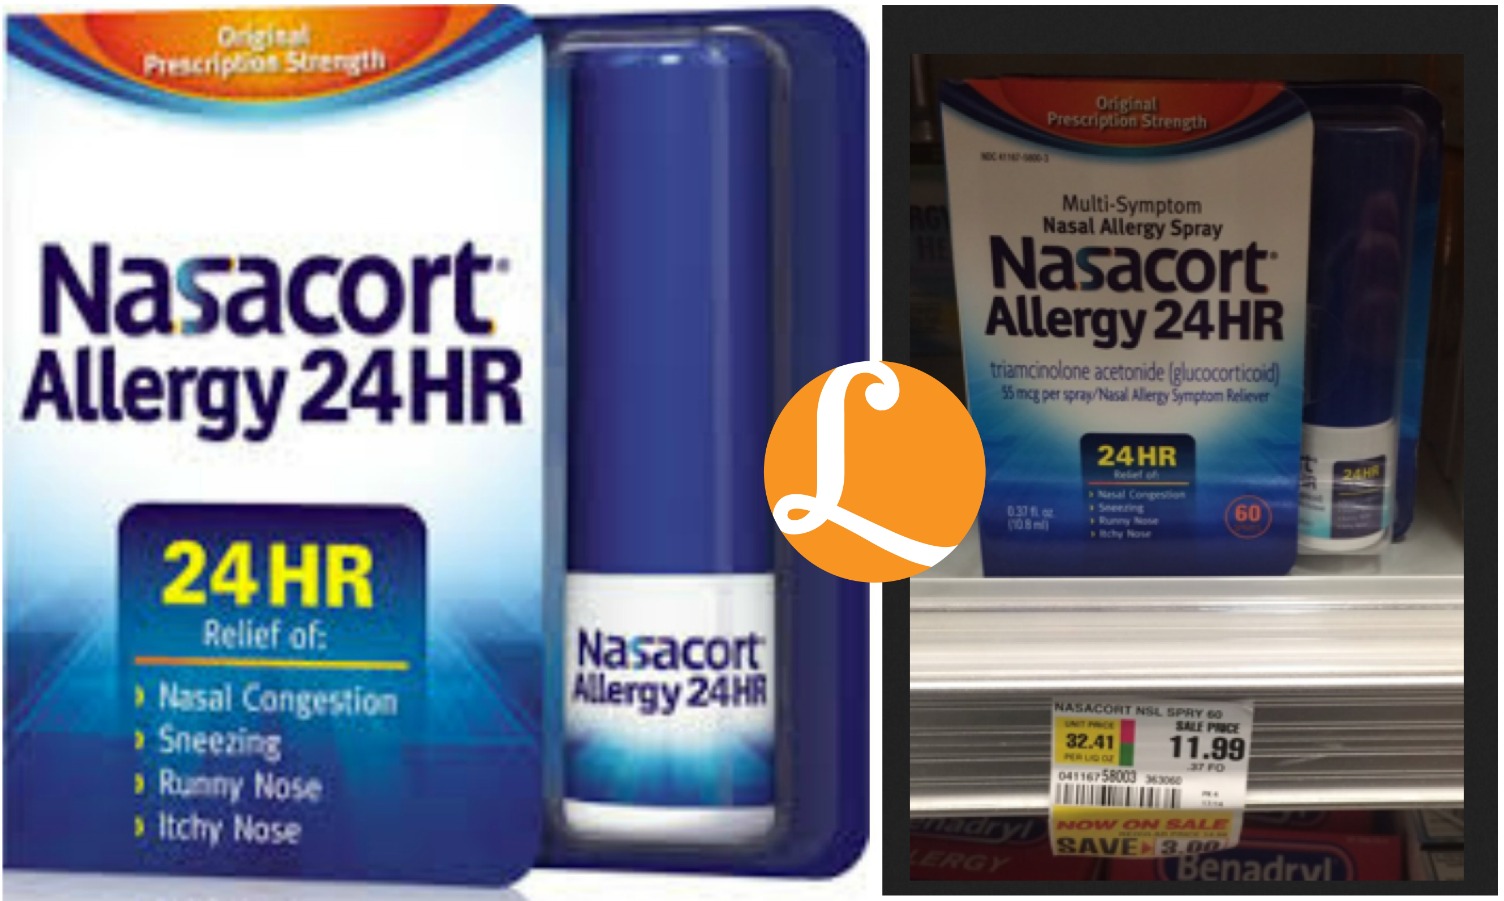 Nasacort Allergy Nasal Spray as Low as 1.99 at ShopRite! Living Rich